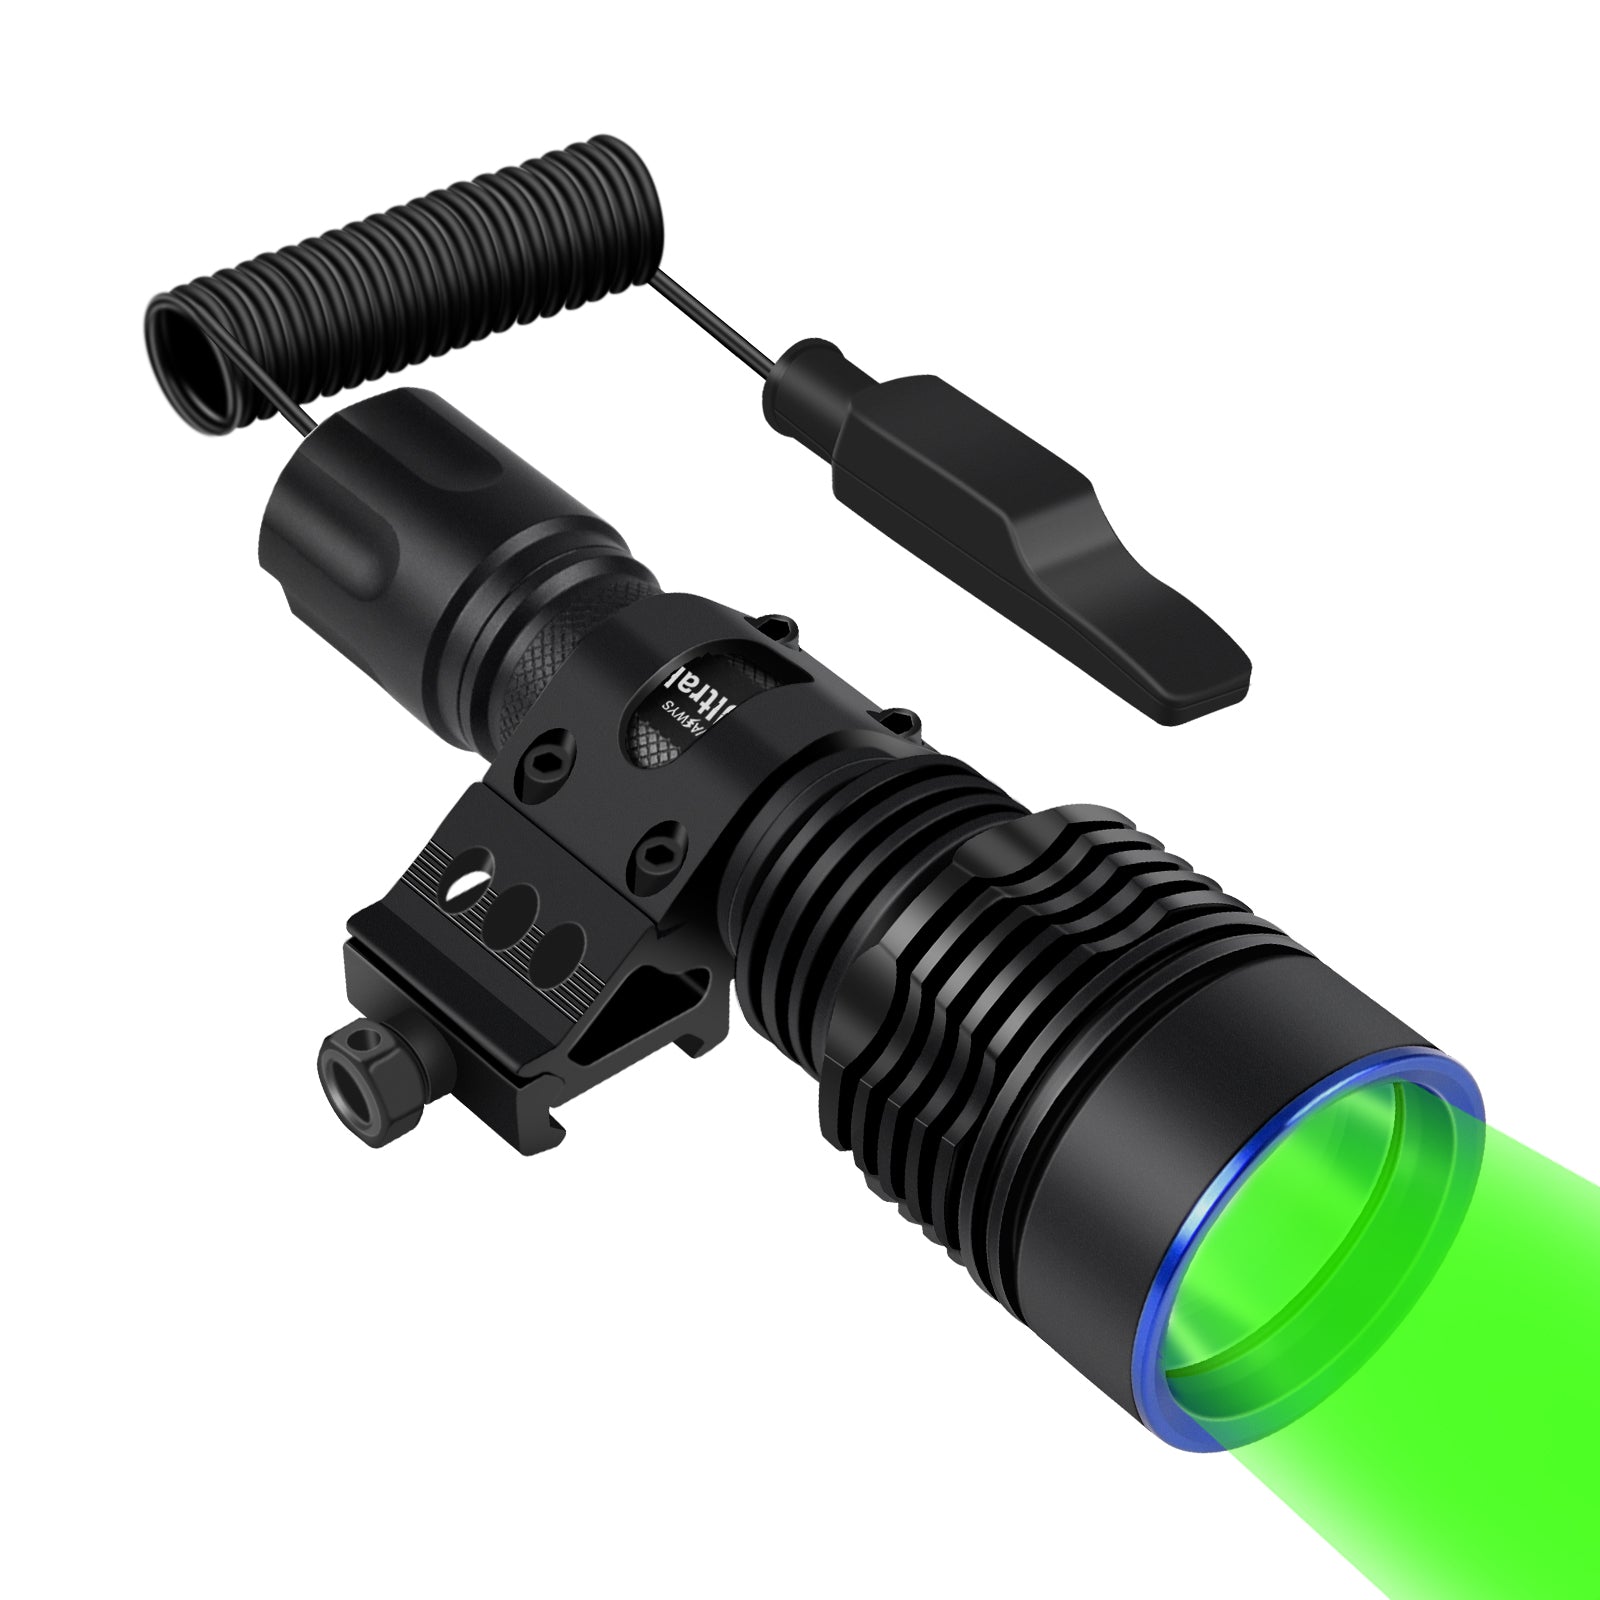 UltraFire GC20 10W KP CSLNM1.TG Green LED 1500-Yards 520-535 nm Hunting Flashlight